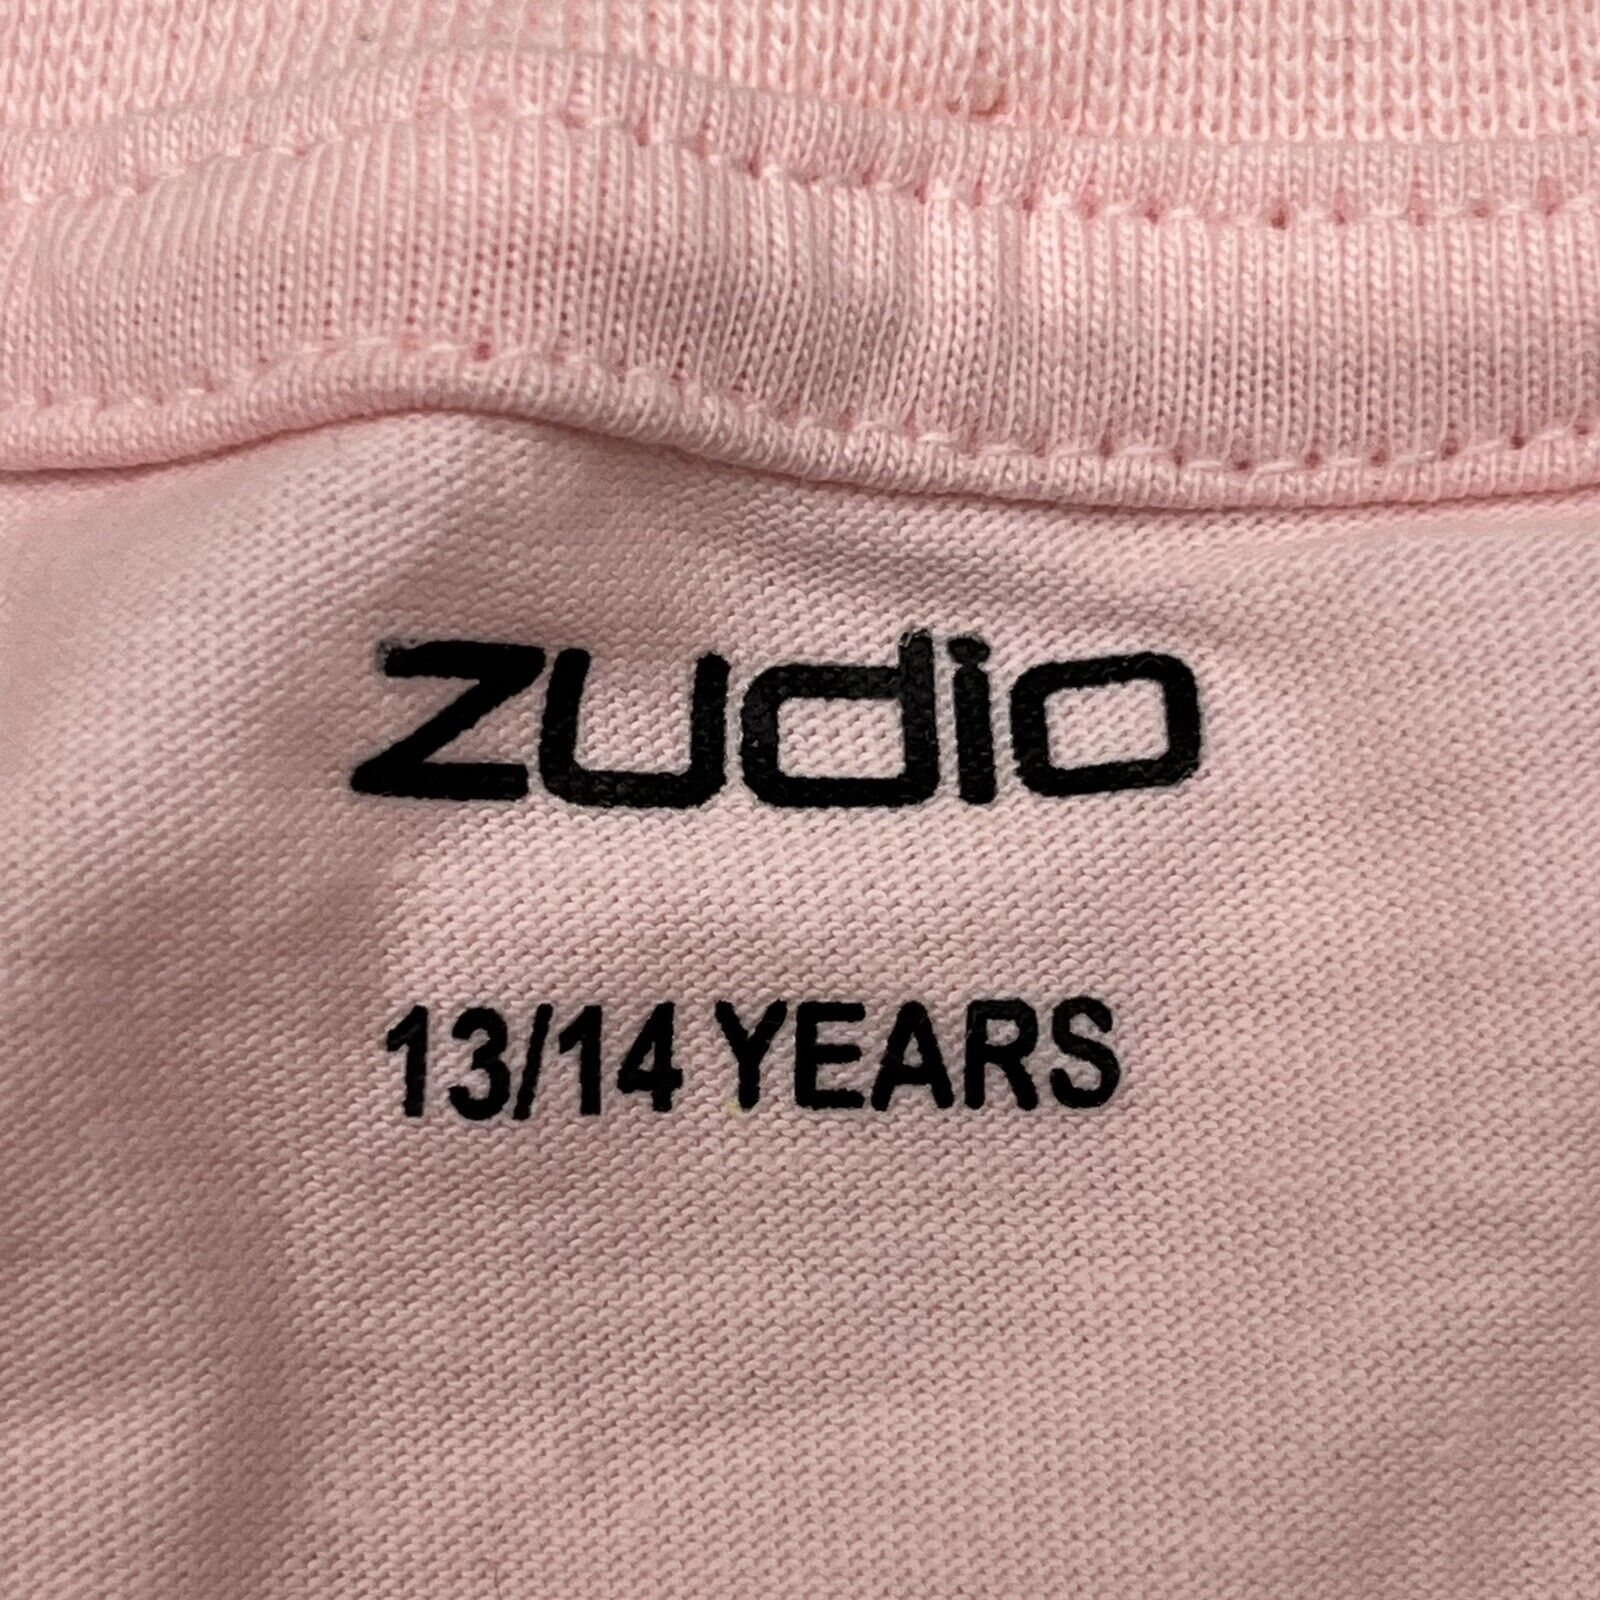 Zudio Pink Short Sleeve T-Shirt Boys Size 13/14 Years NEW - beyond exchange